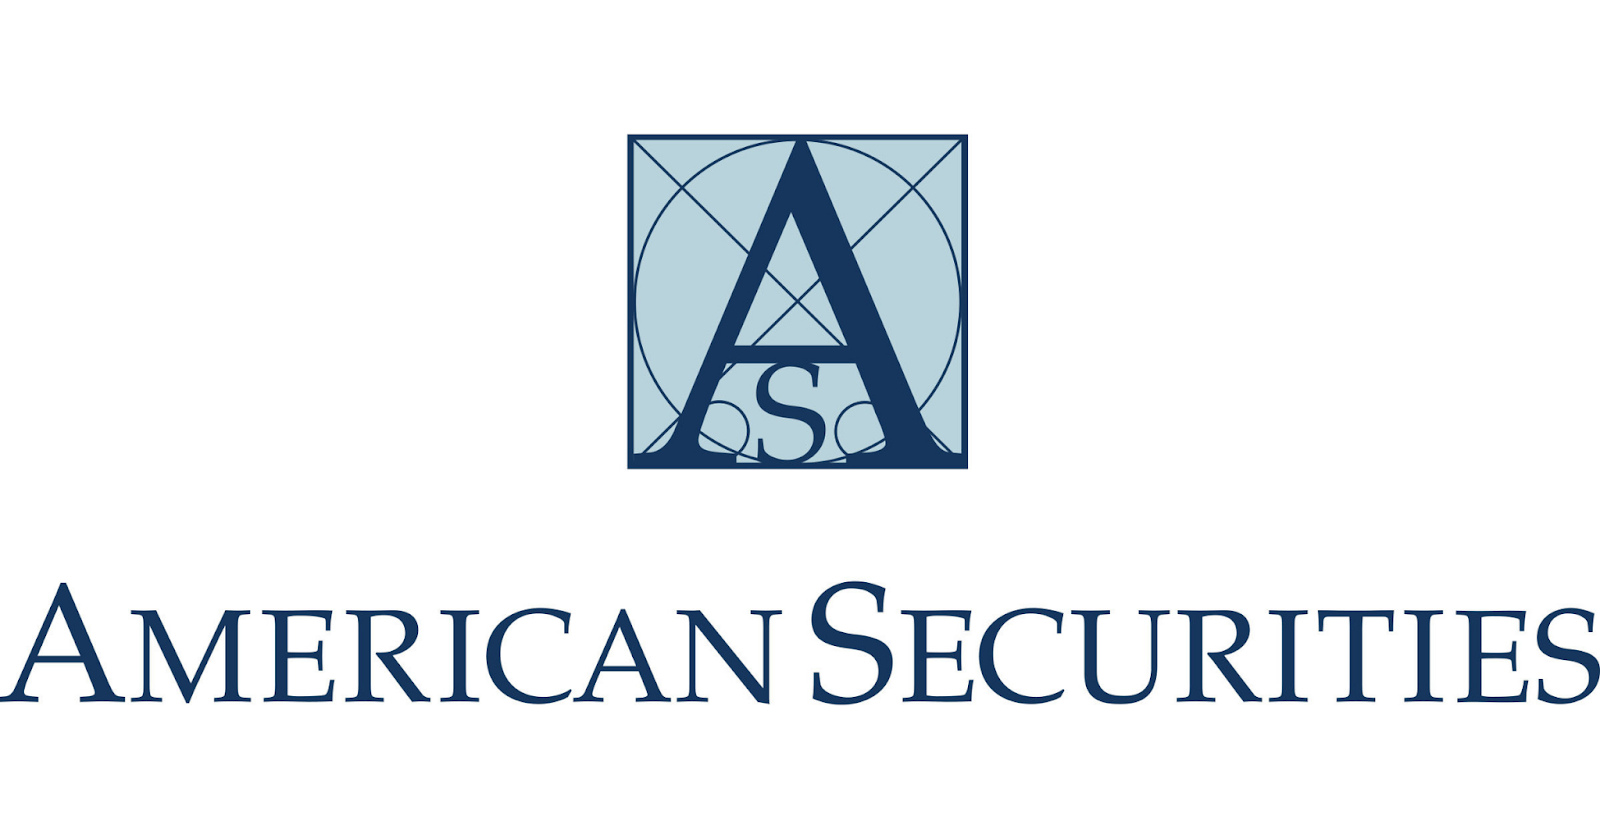 American Securities logo